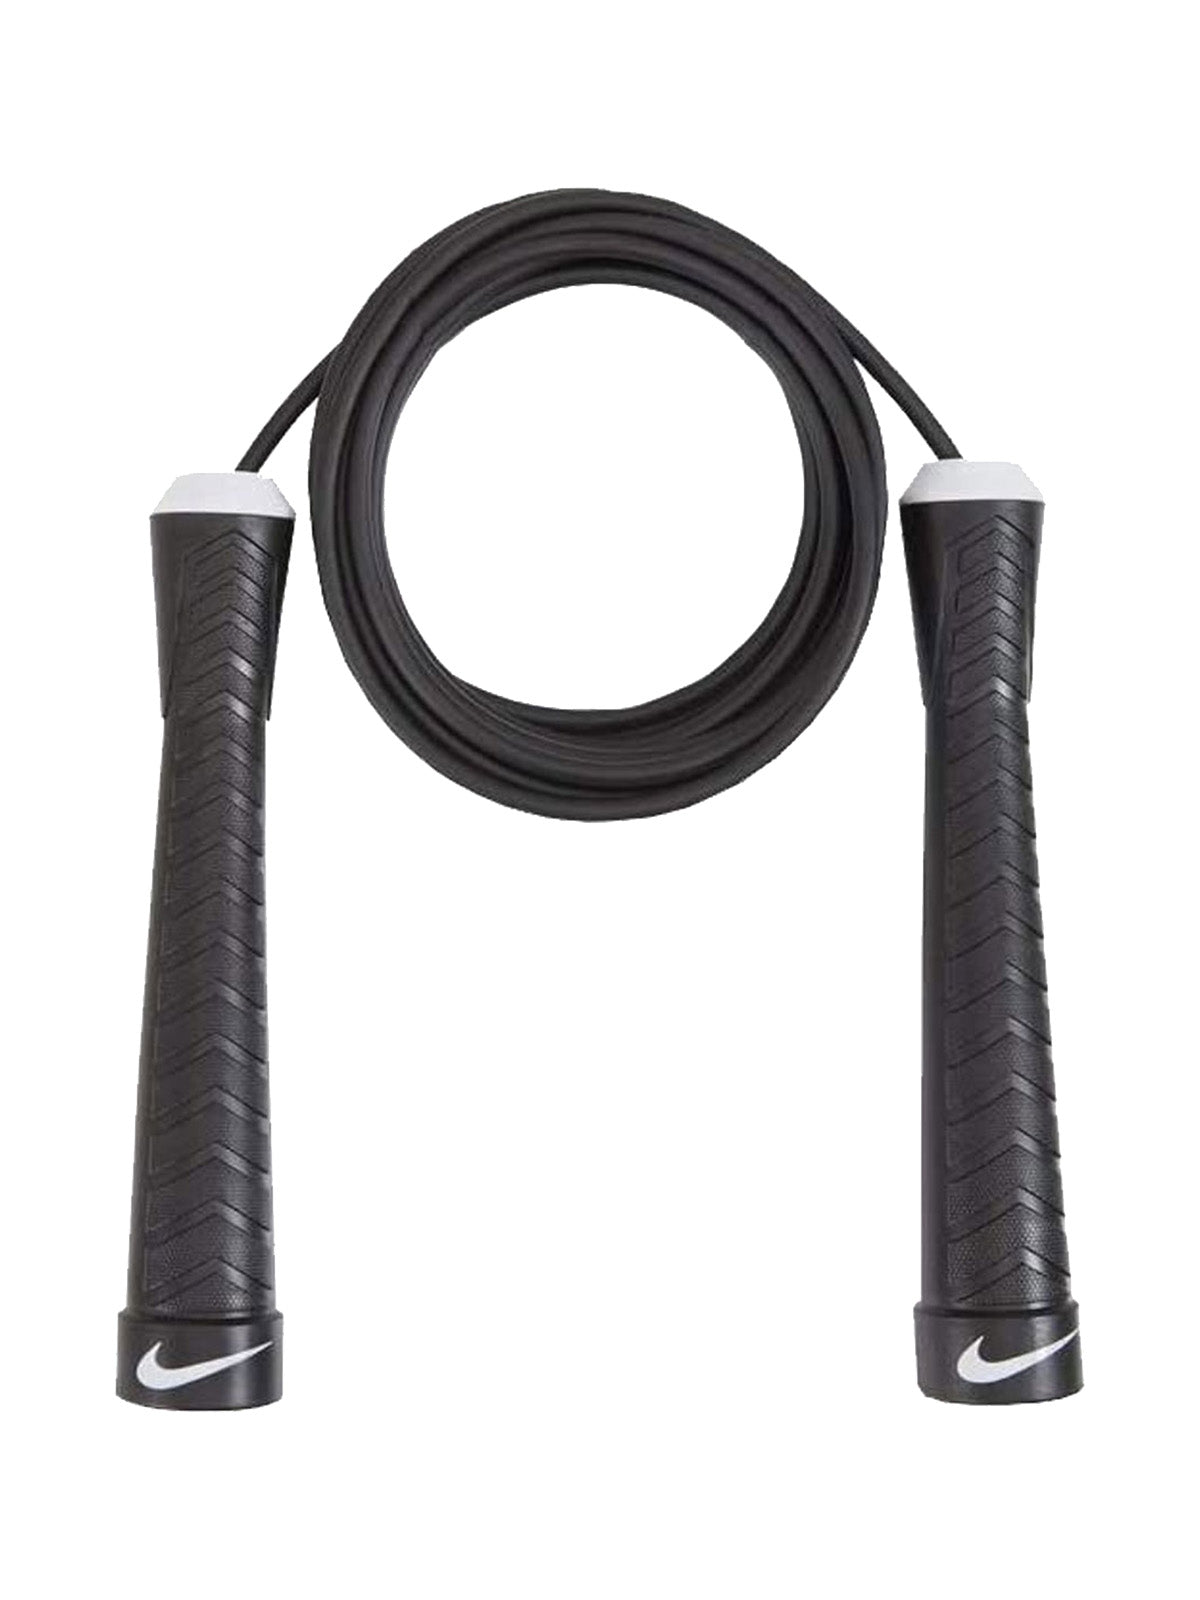 Altro (Corsa) Unisex Nike - Nike Fundamental Speed Rope - Nero